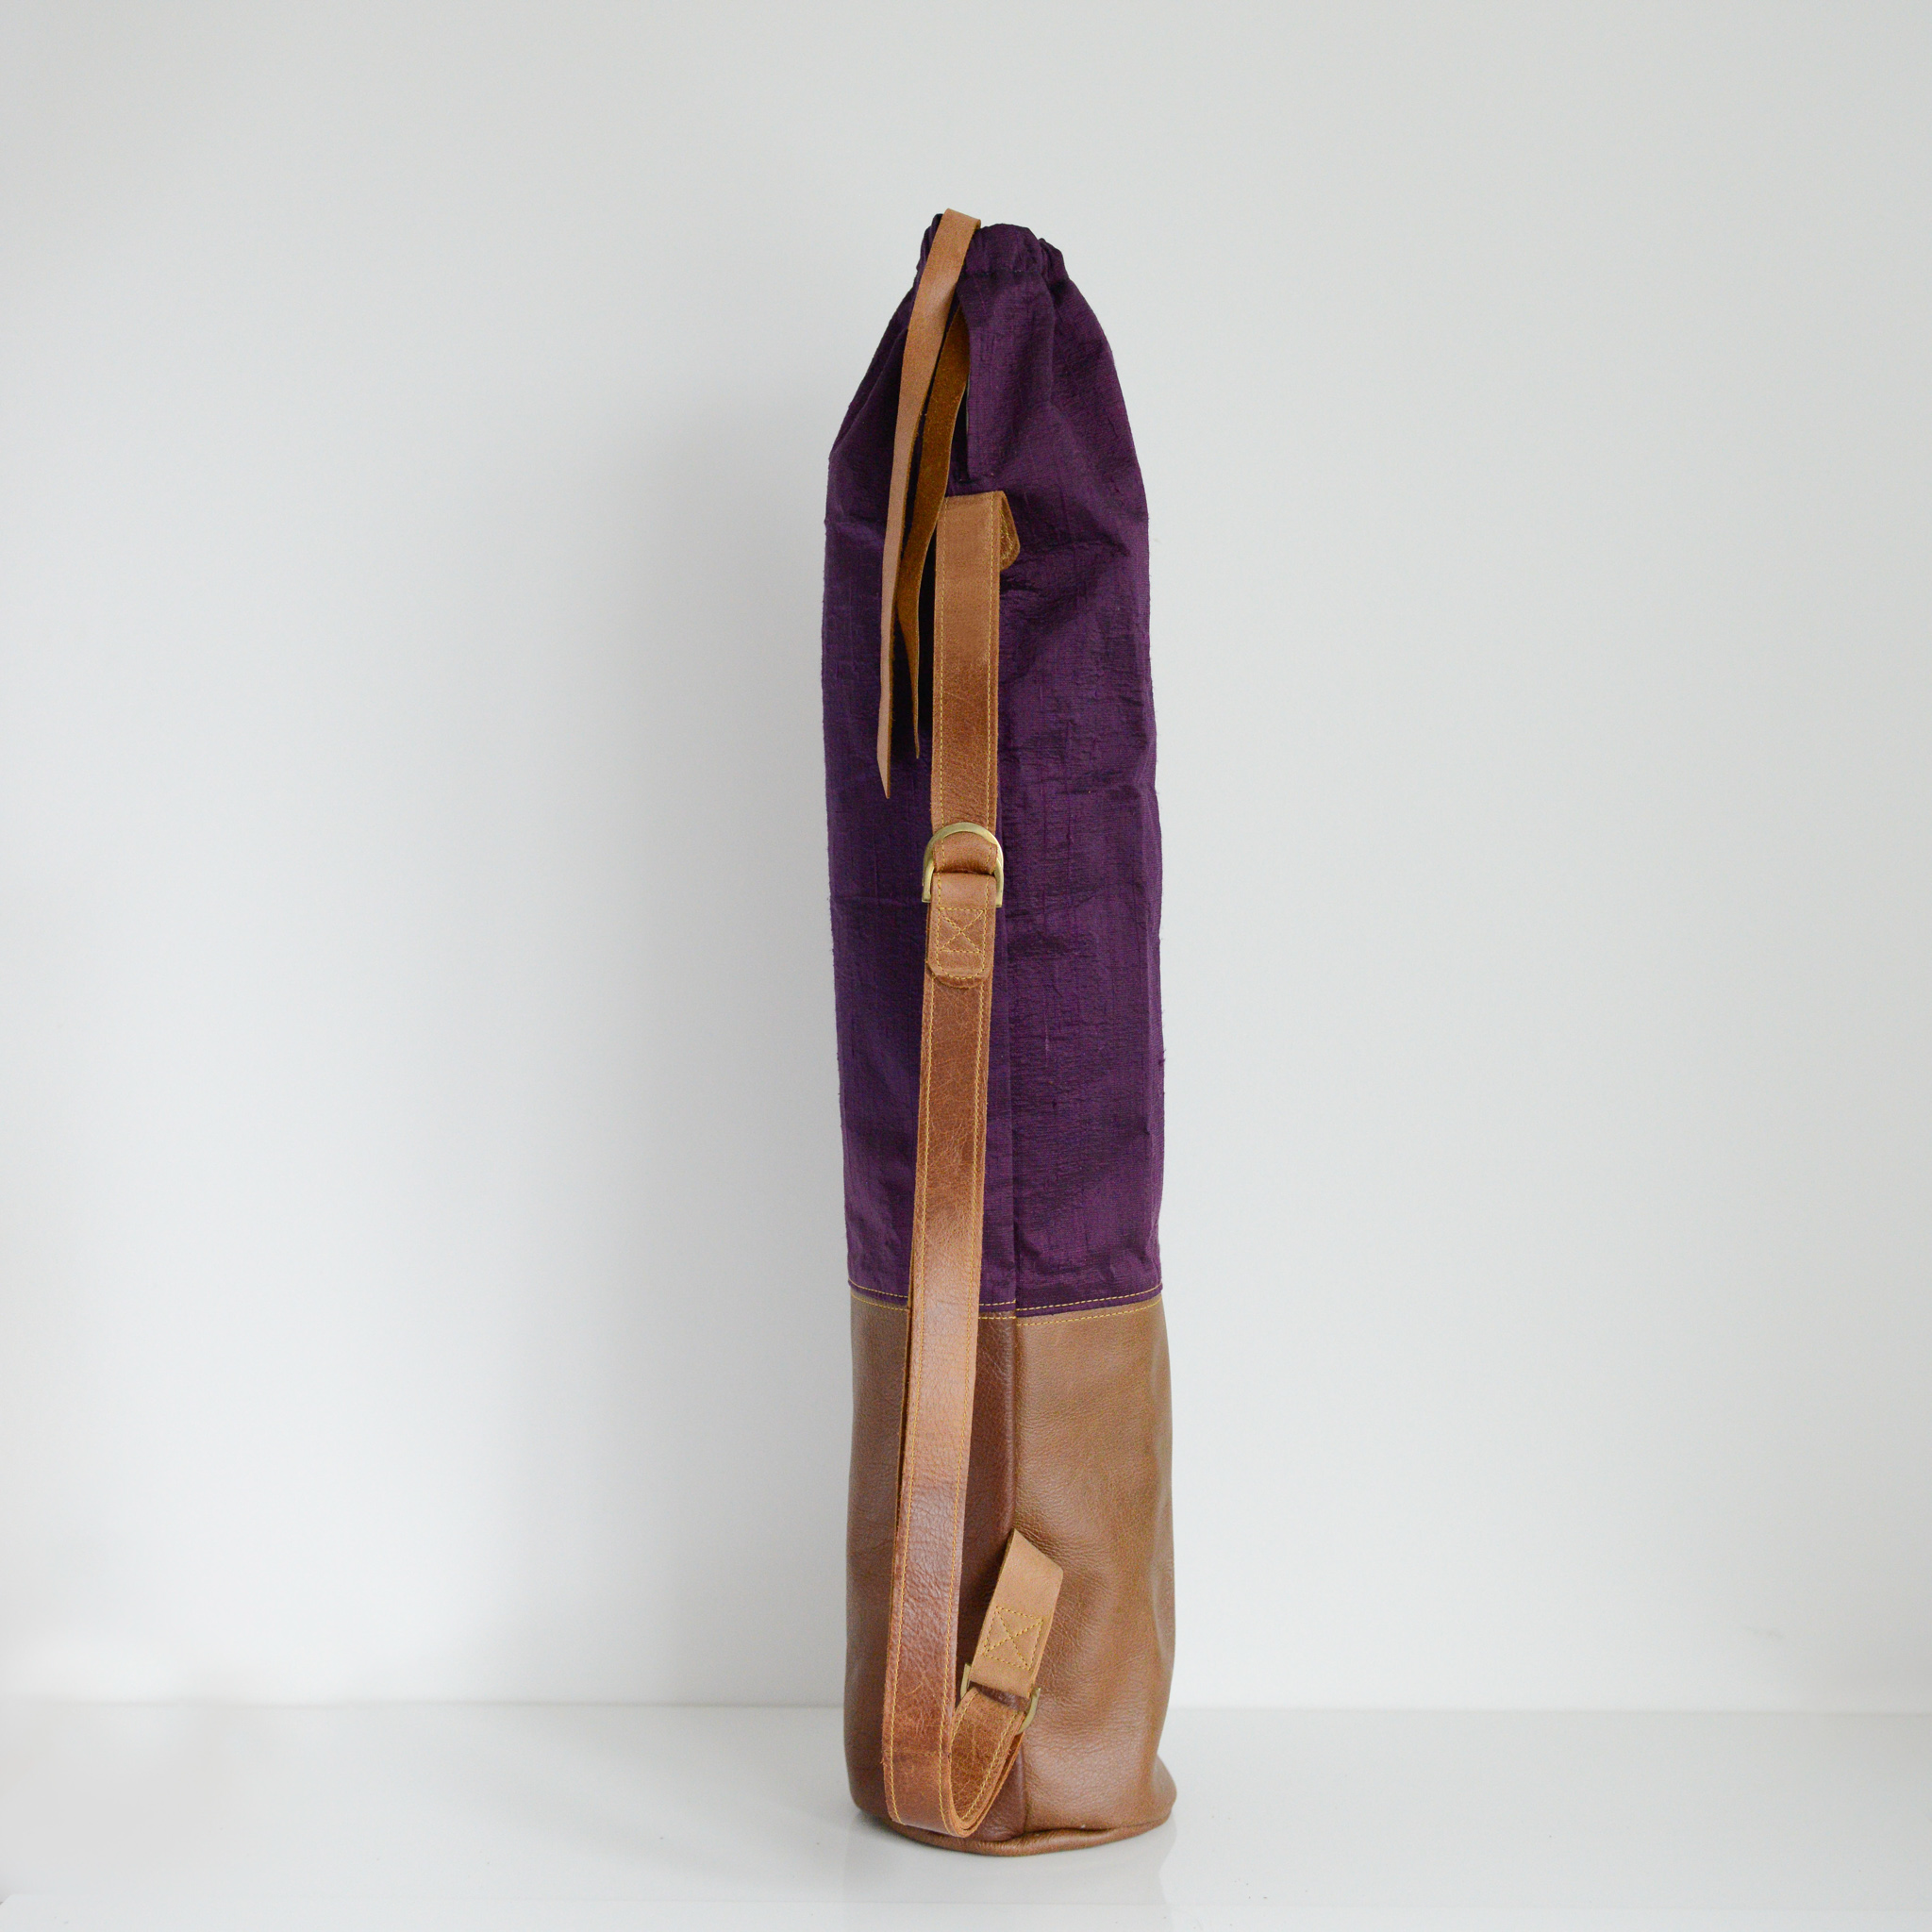 Adjustable Yoga Mat Bag, Bags